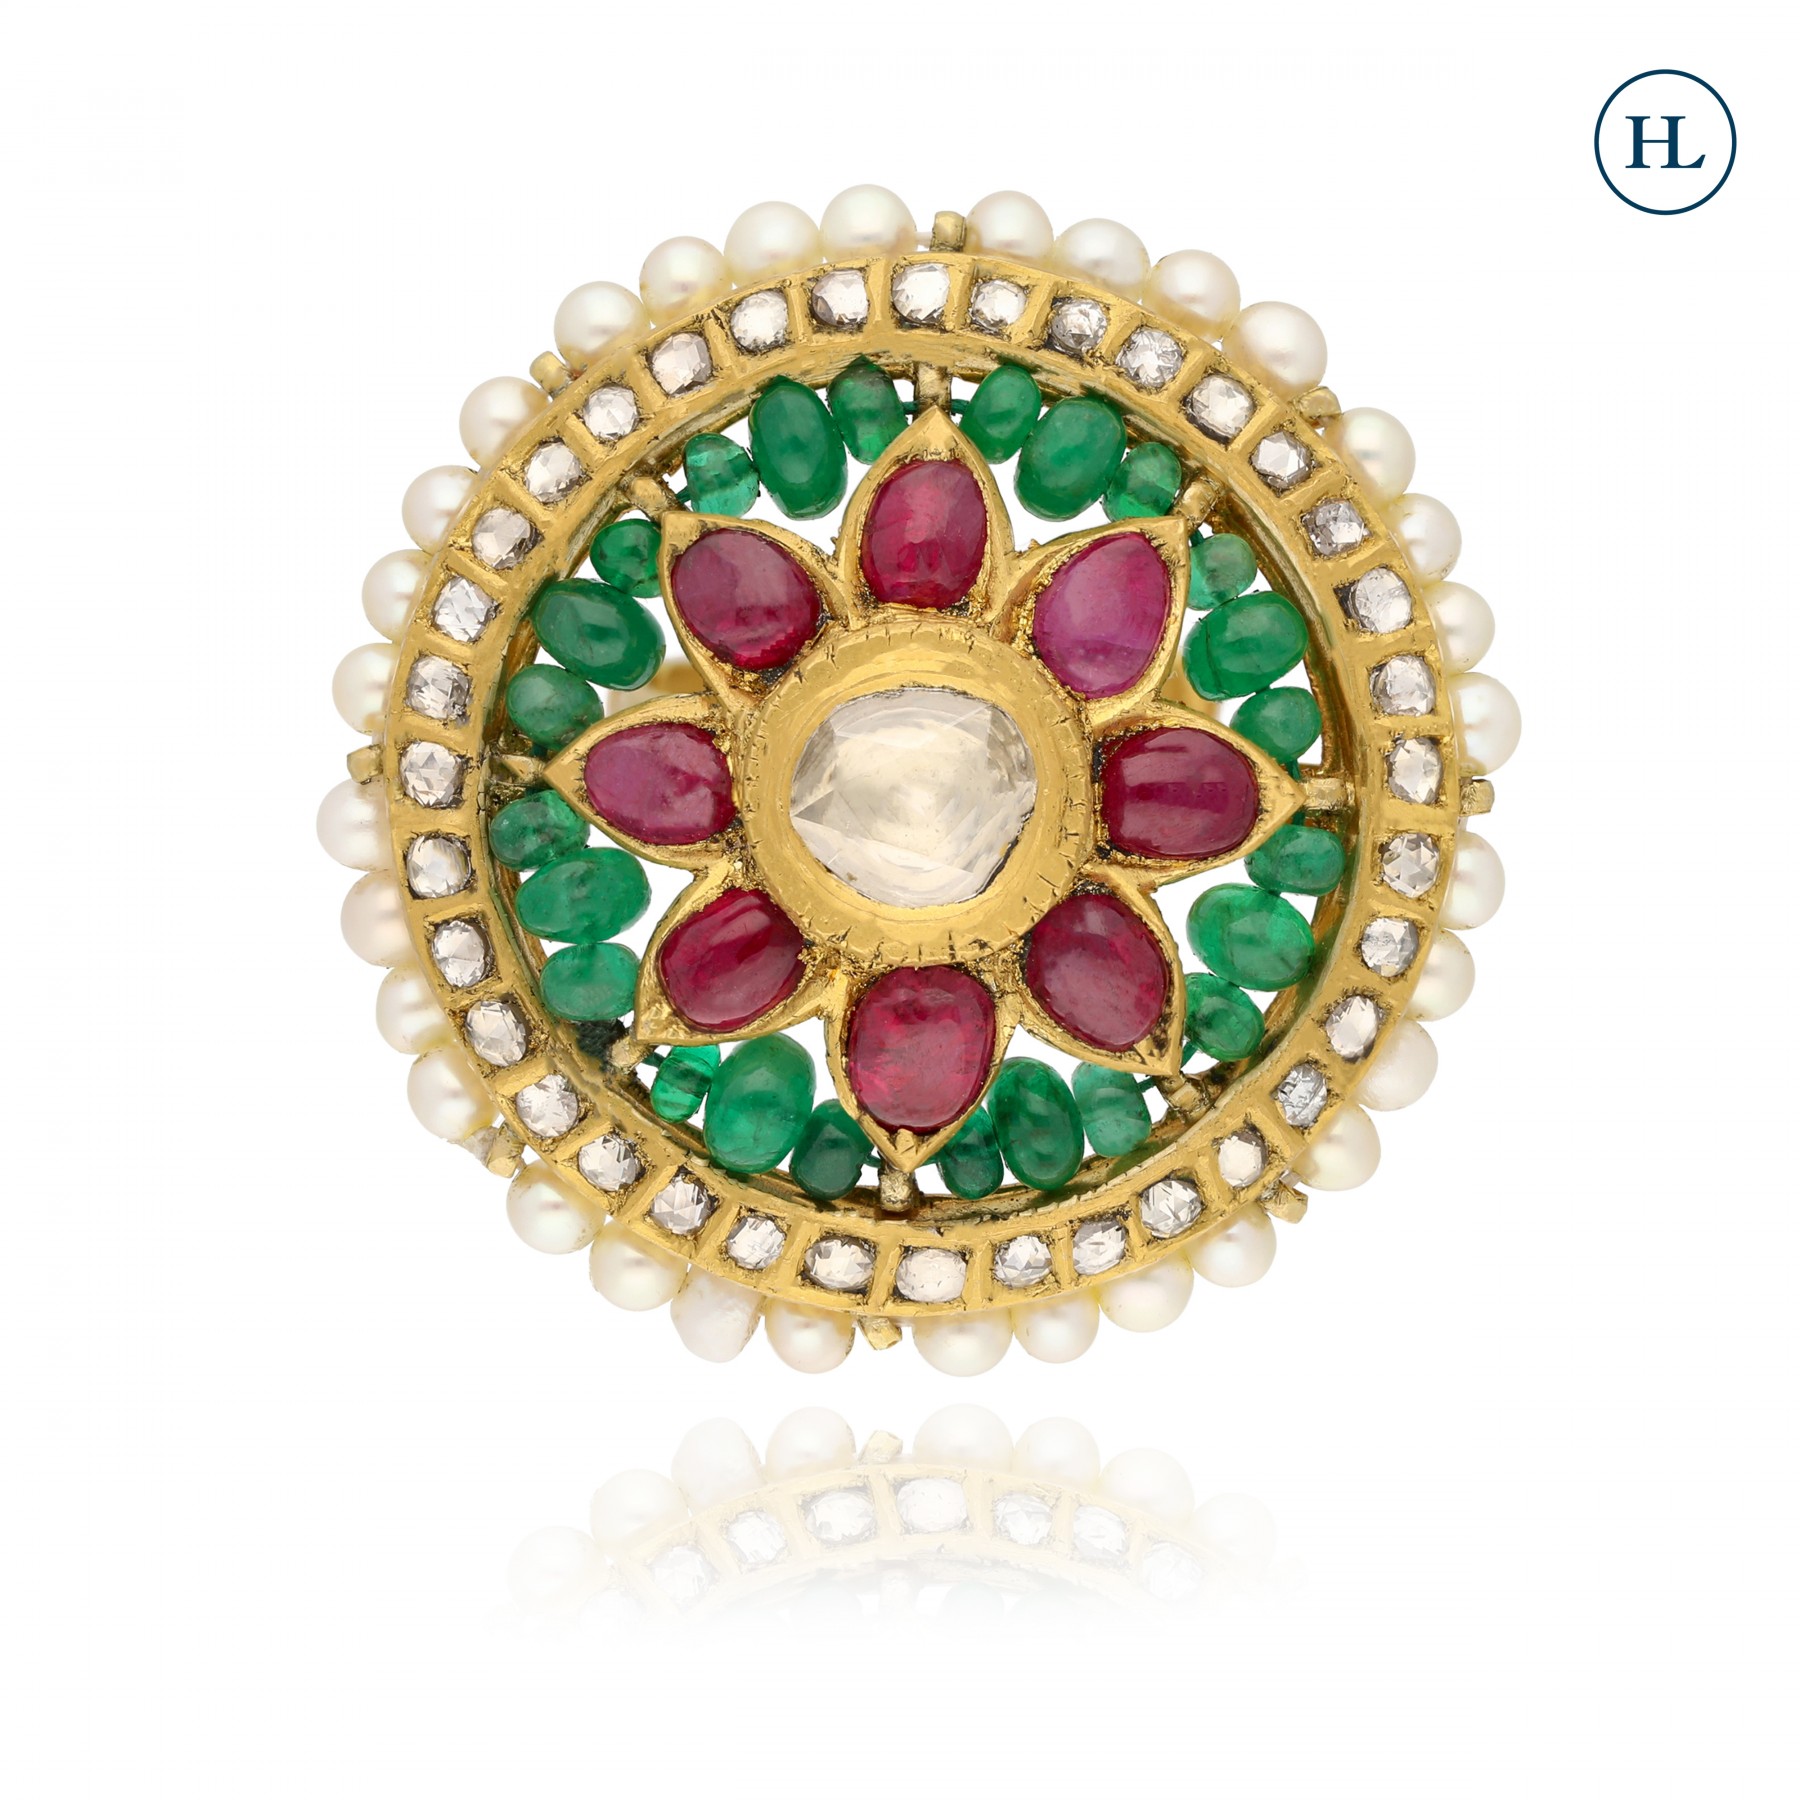 Hazoorilal polki jewellery in India: perfect for wedding bells, how?